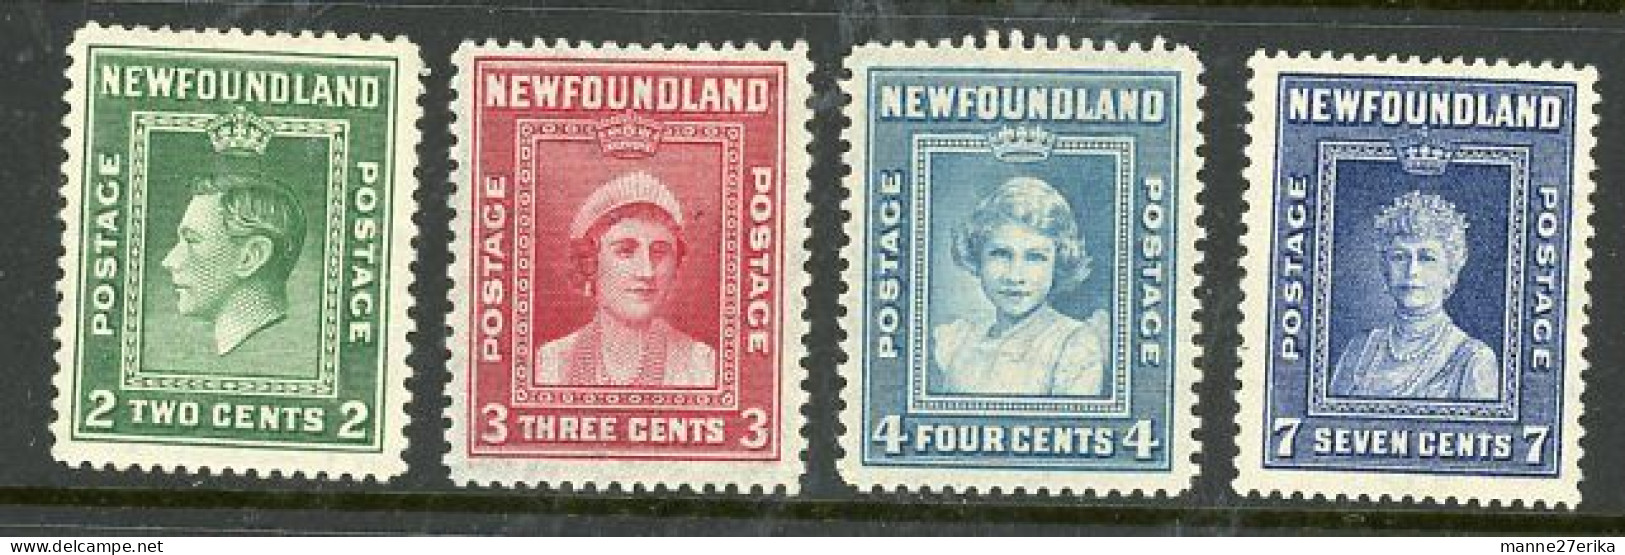 Newfoundland MH 1938 Royal Family Issue - 1908-1947